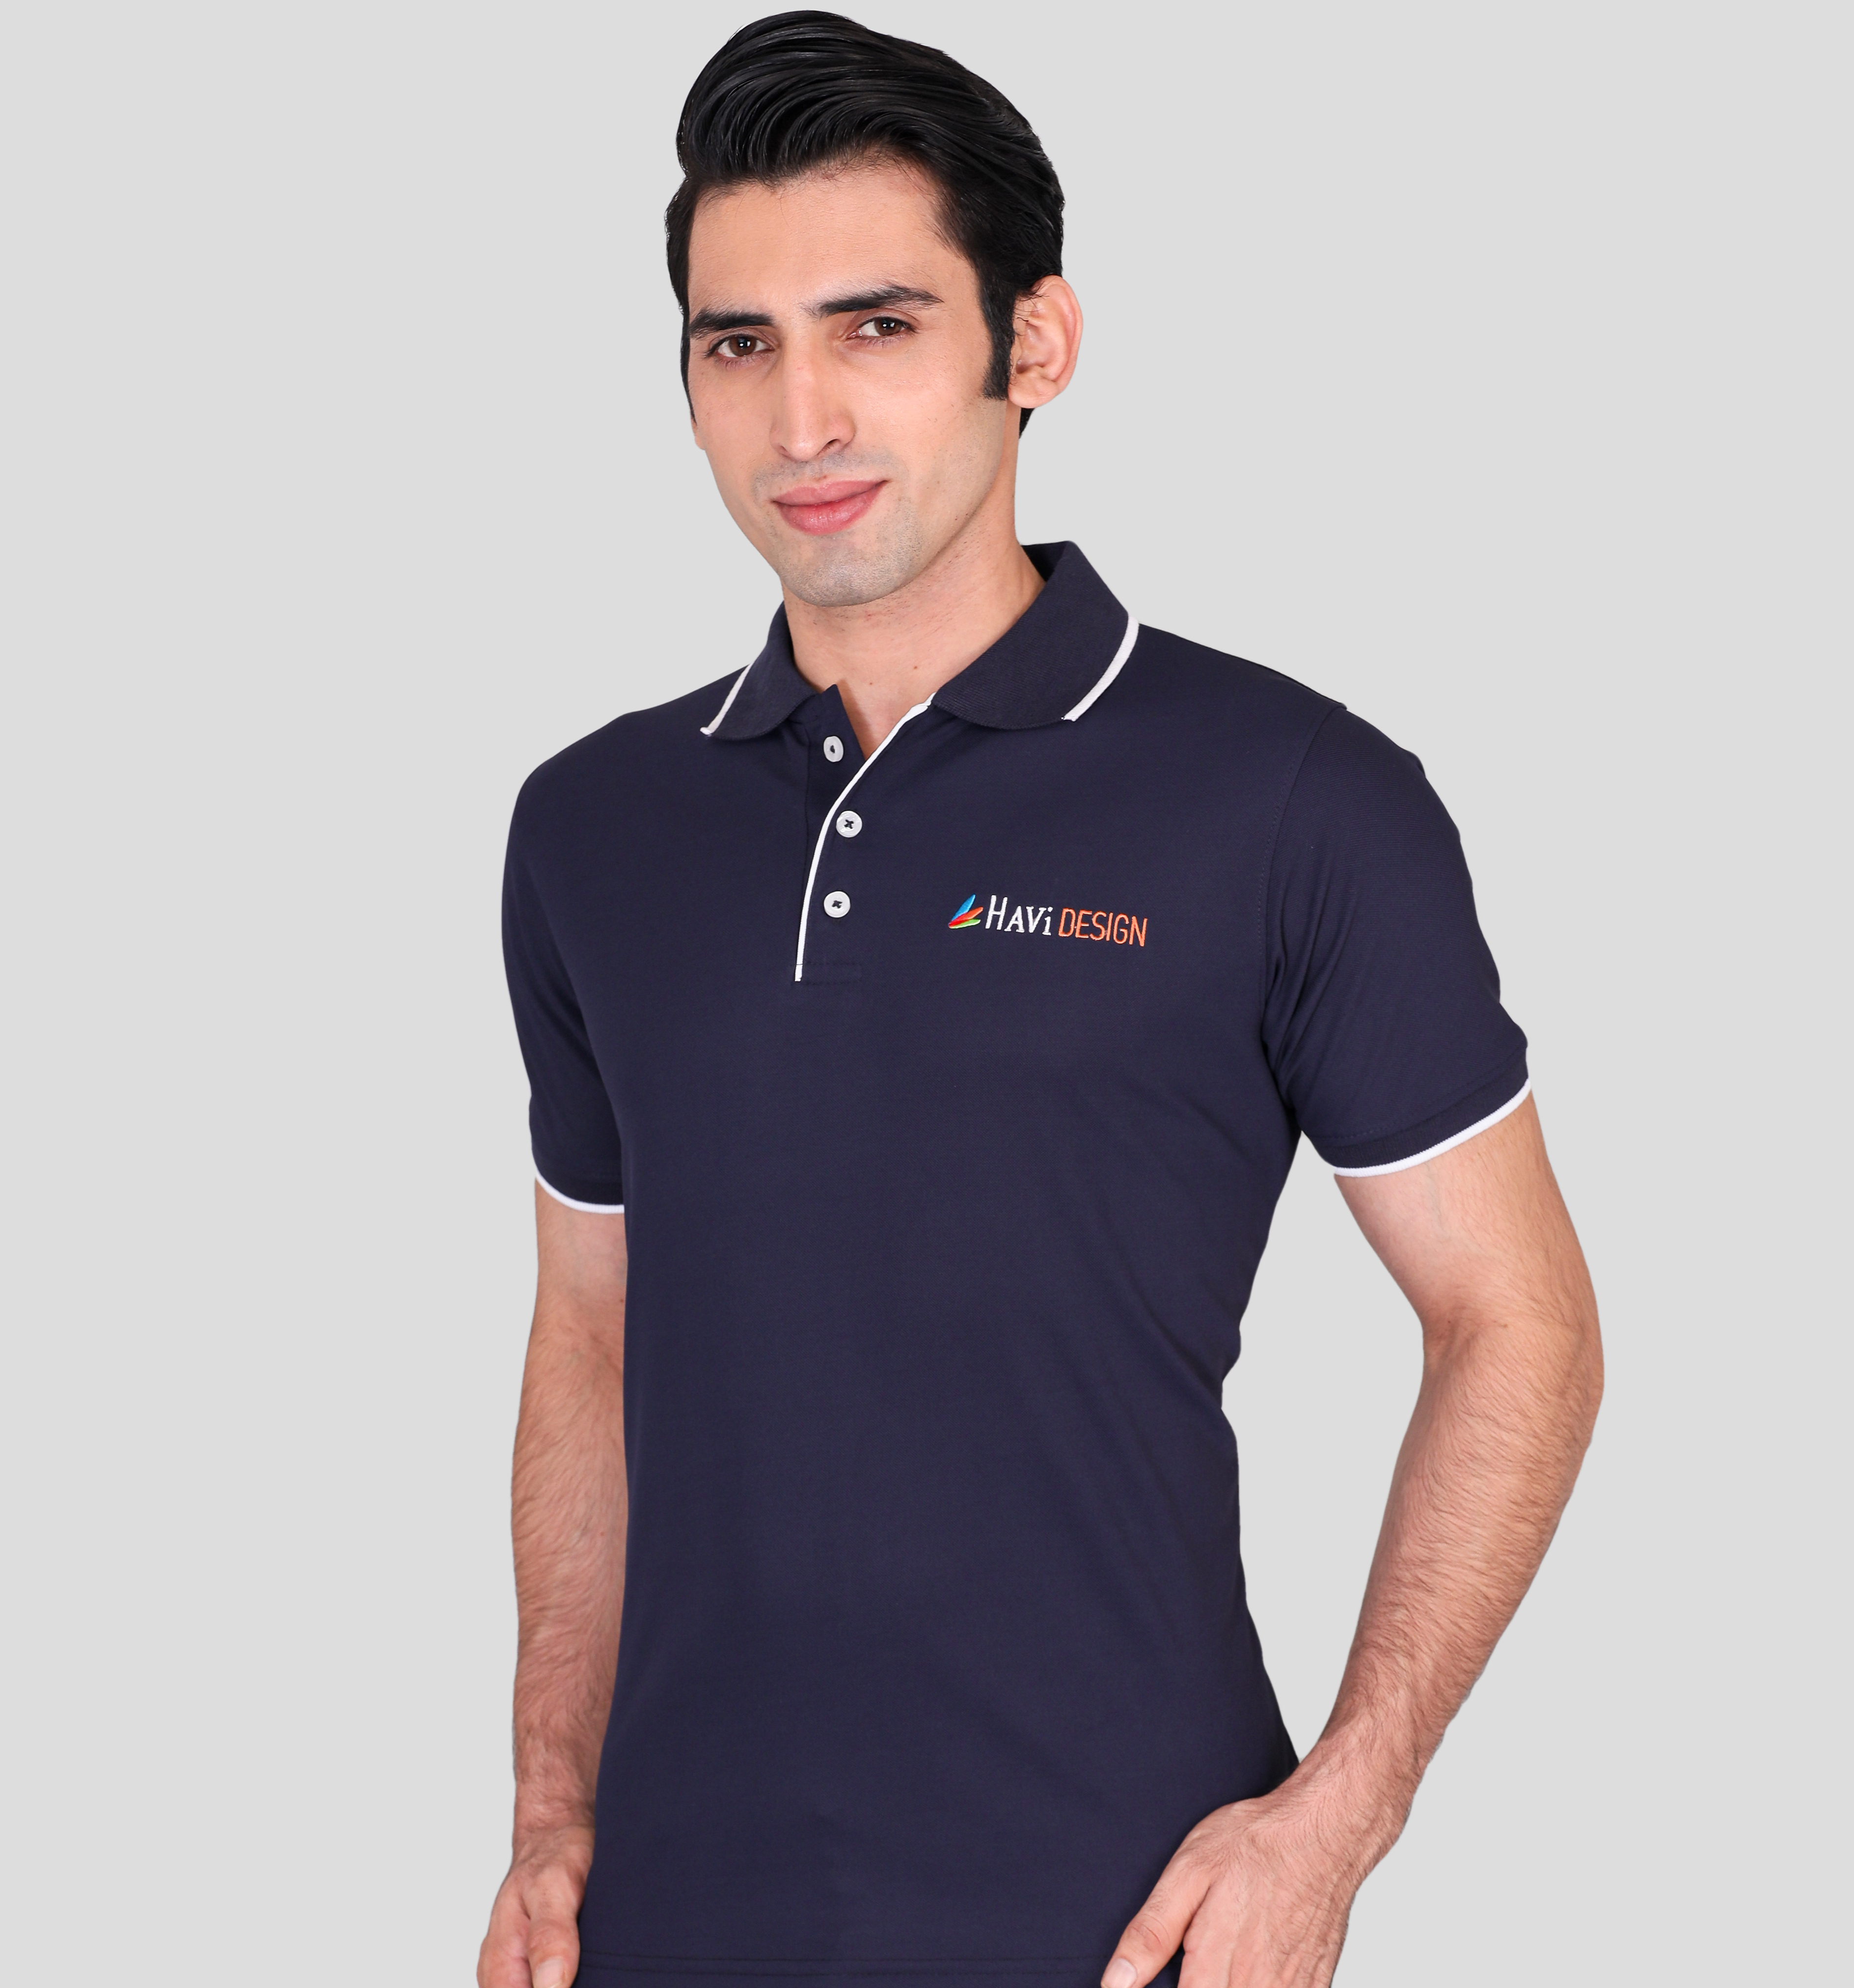 Havi design navy blue promotional polo t-shirts supplier 